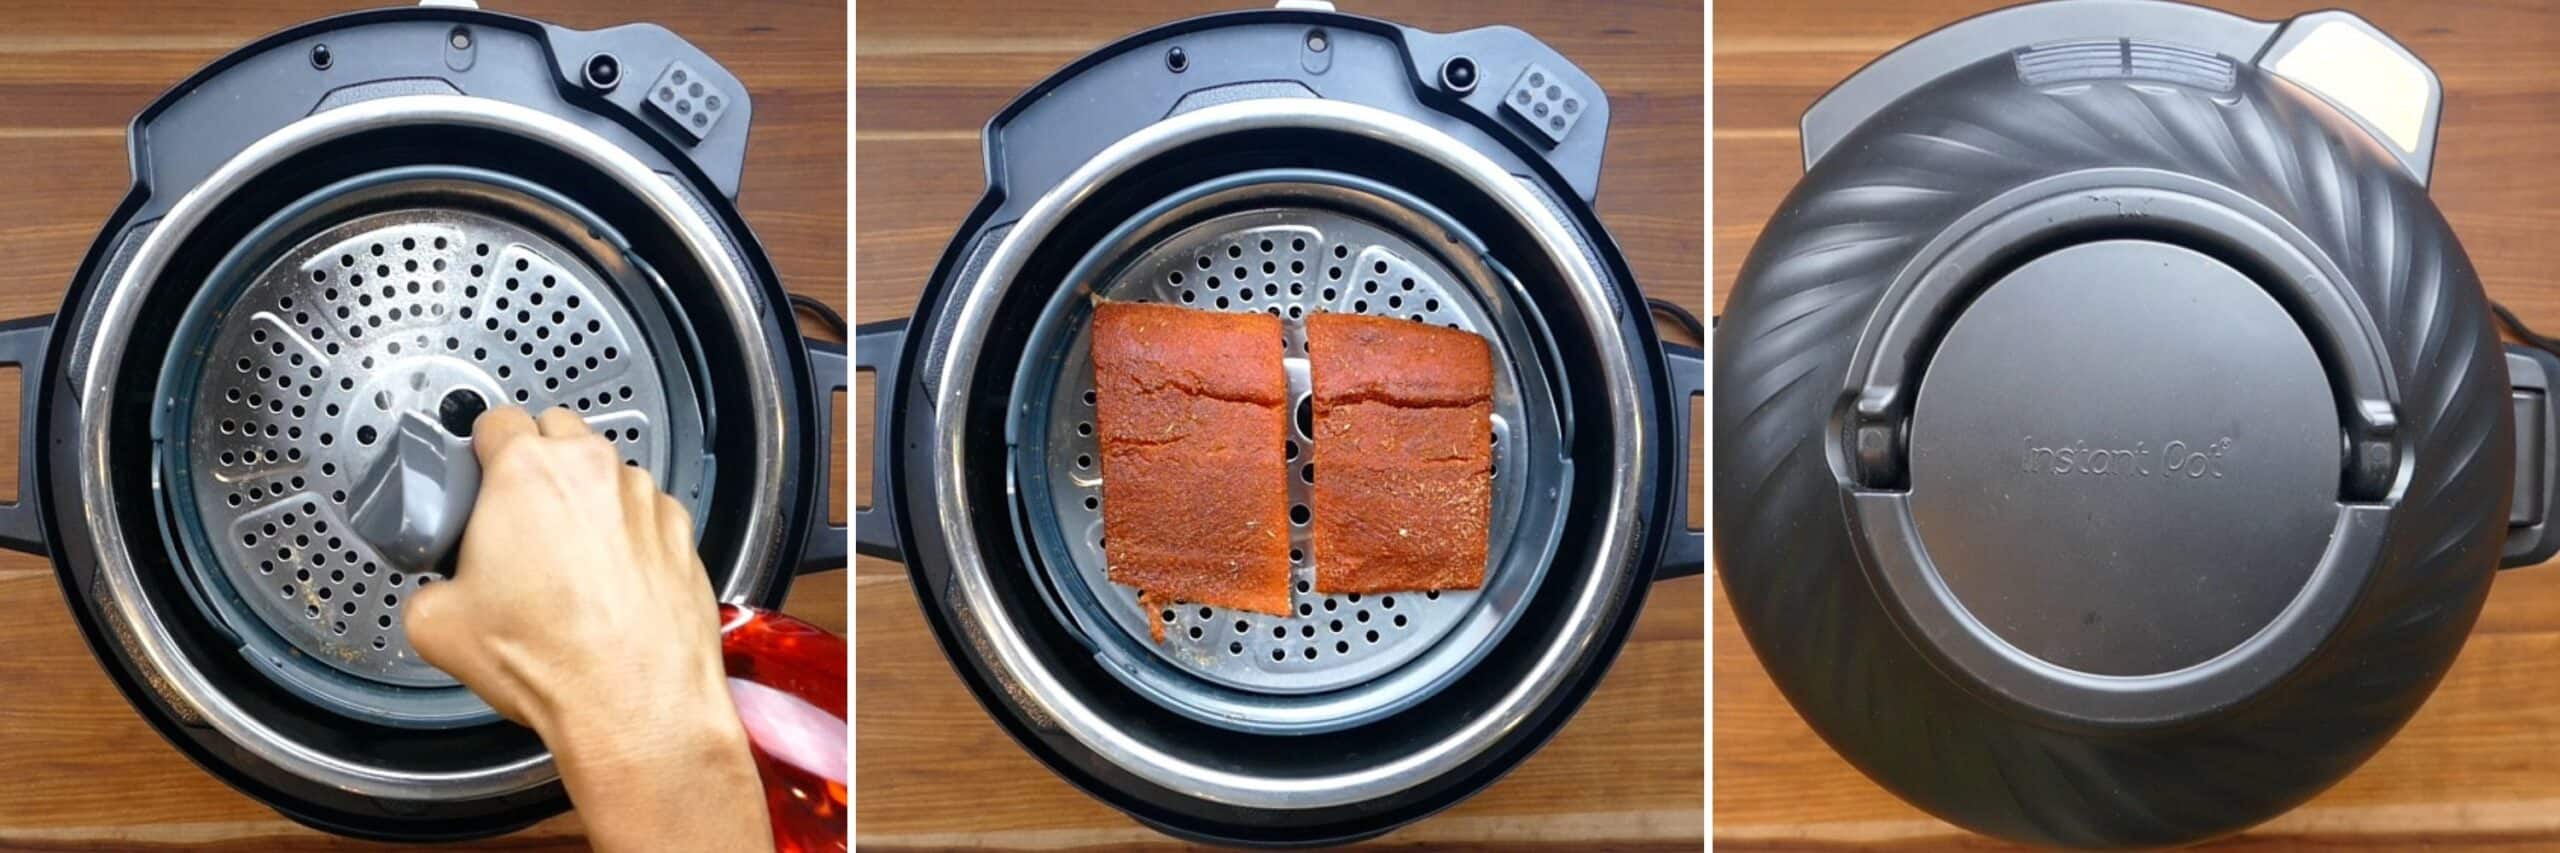 air fryer salmon instruction collage - spray basket, salmon in basket, air fryer closed